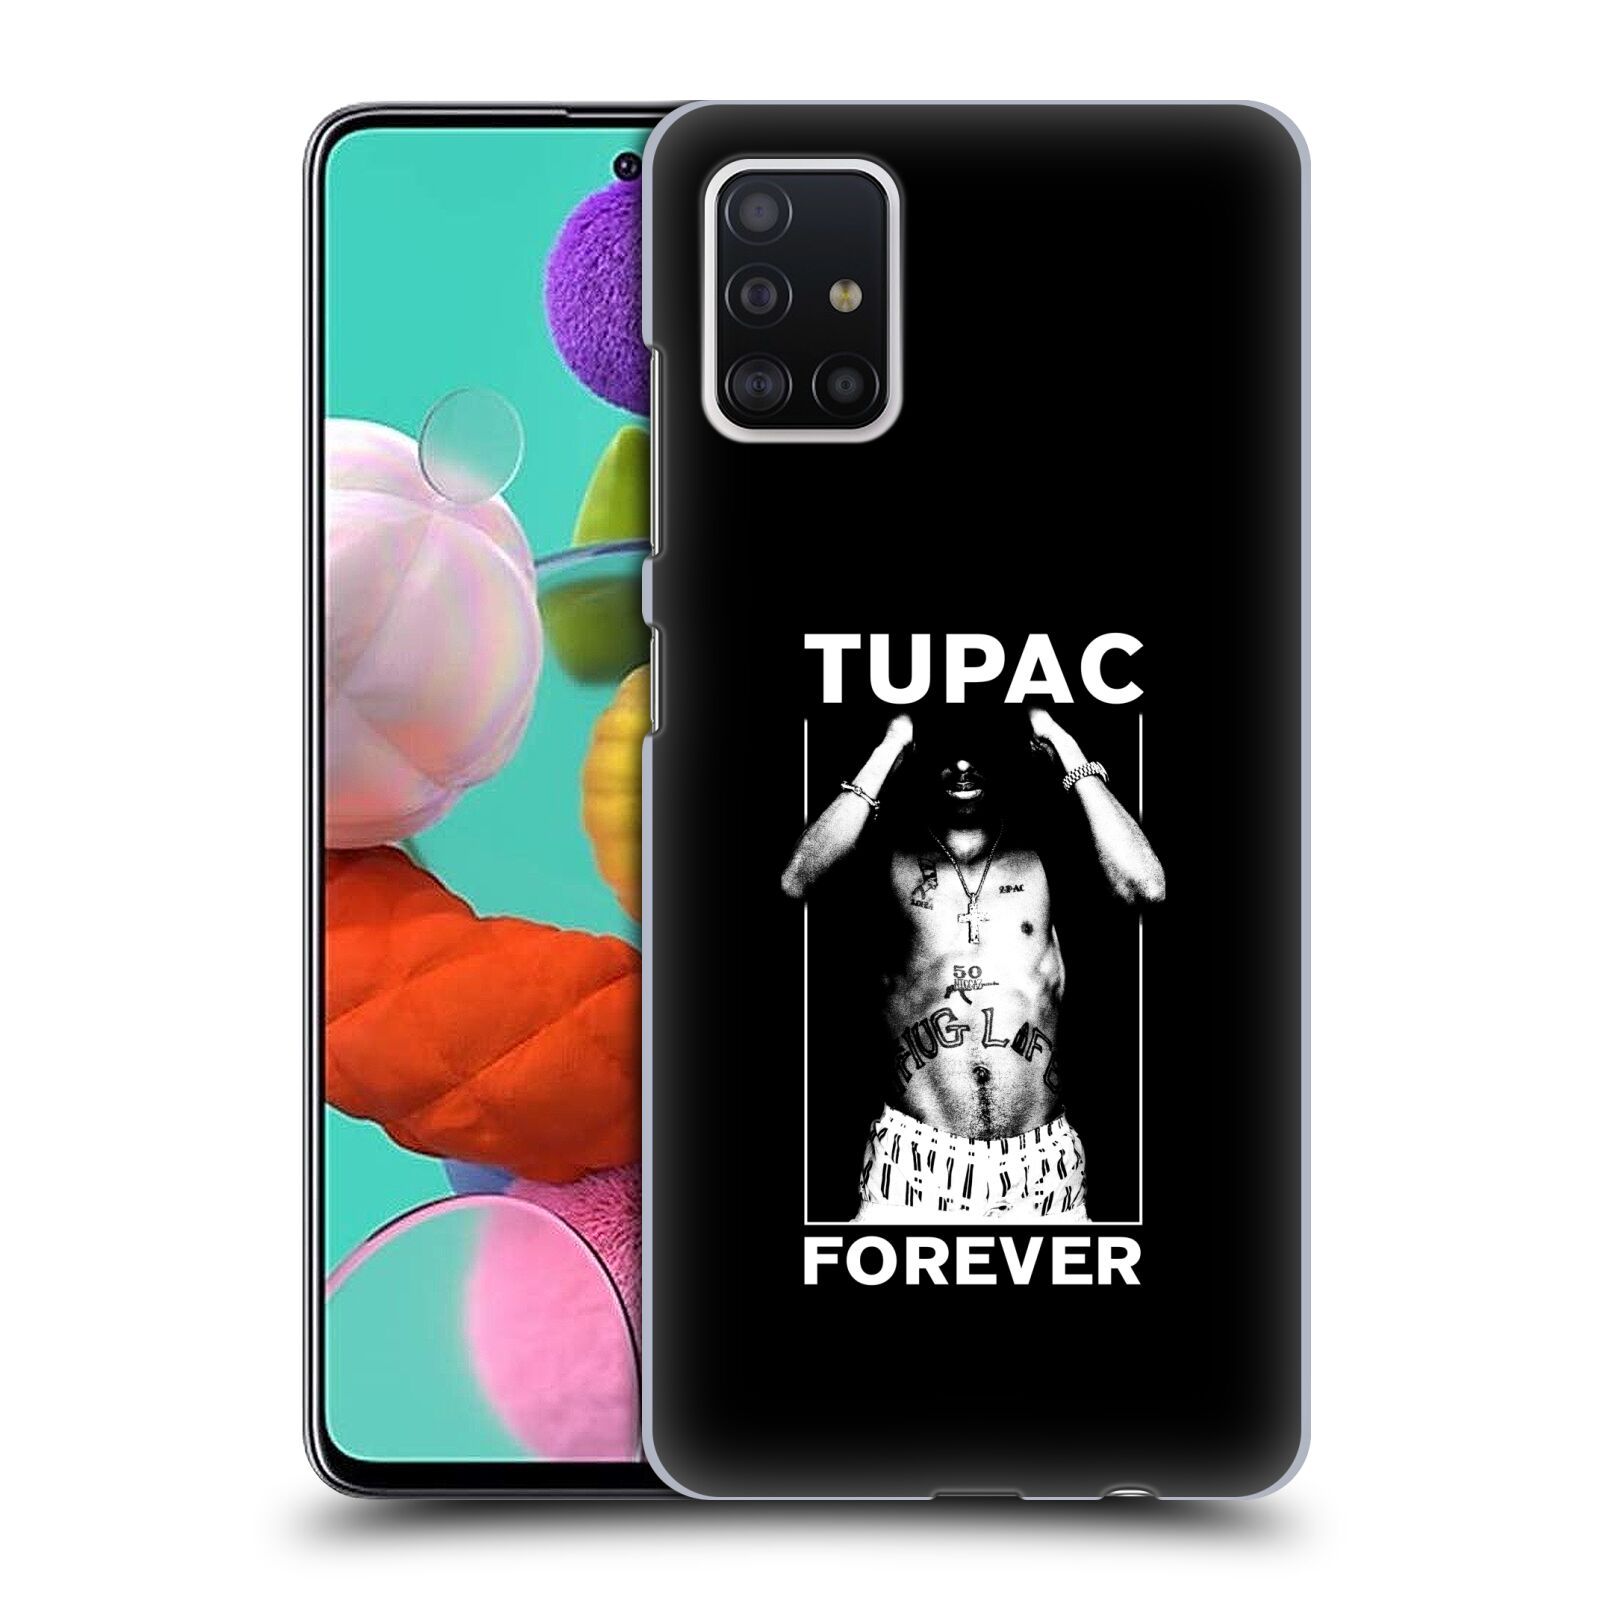 Pouzdro na mobil Samsung Galaxy A51 - HEAD CASE - Zpěvák rapper Tupac Shakur 2Pac bílý popisek FOREVER